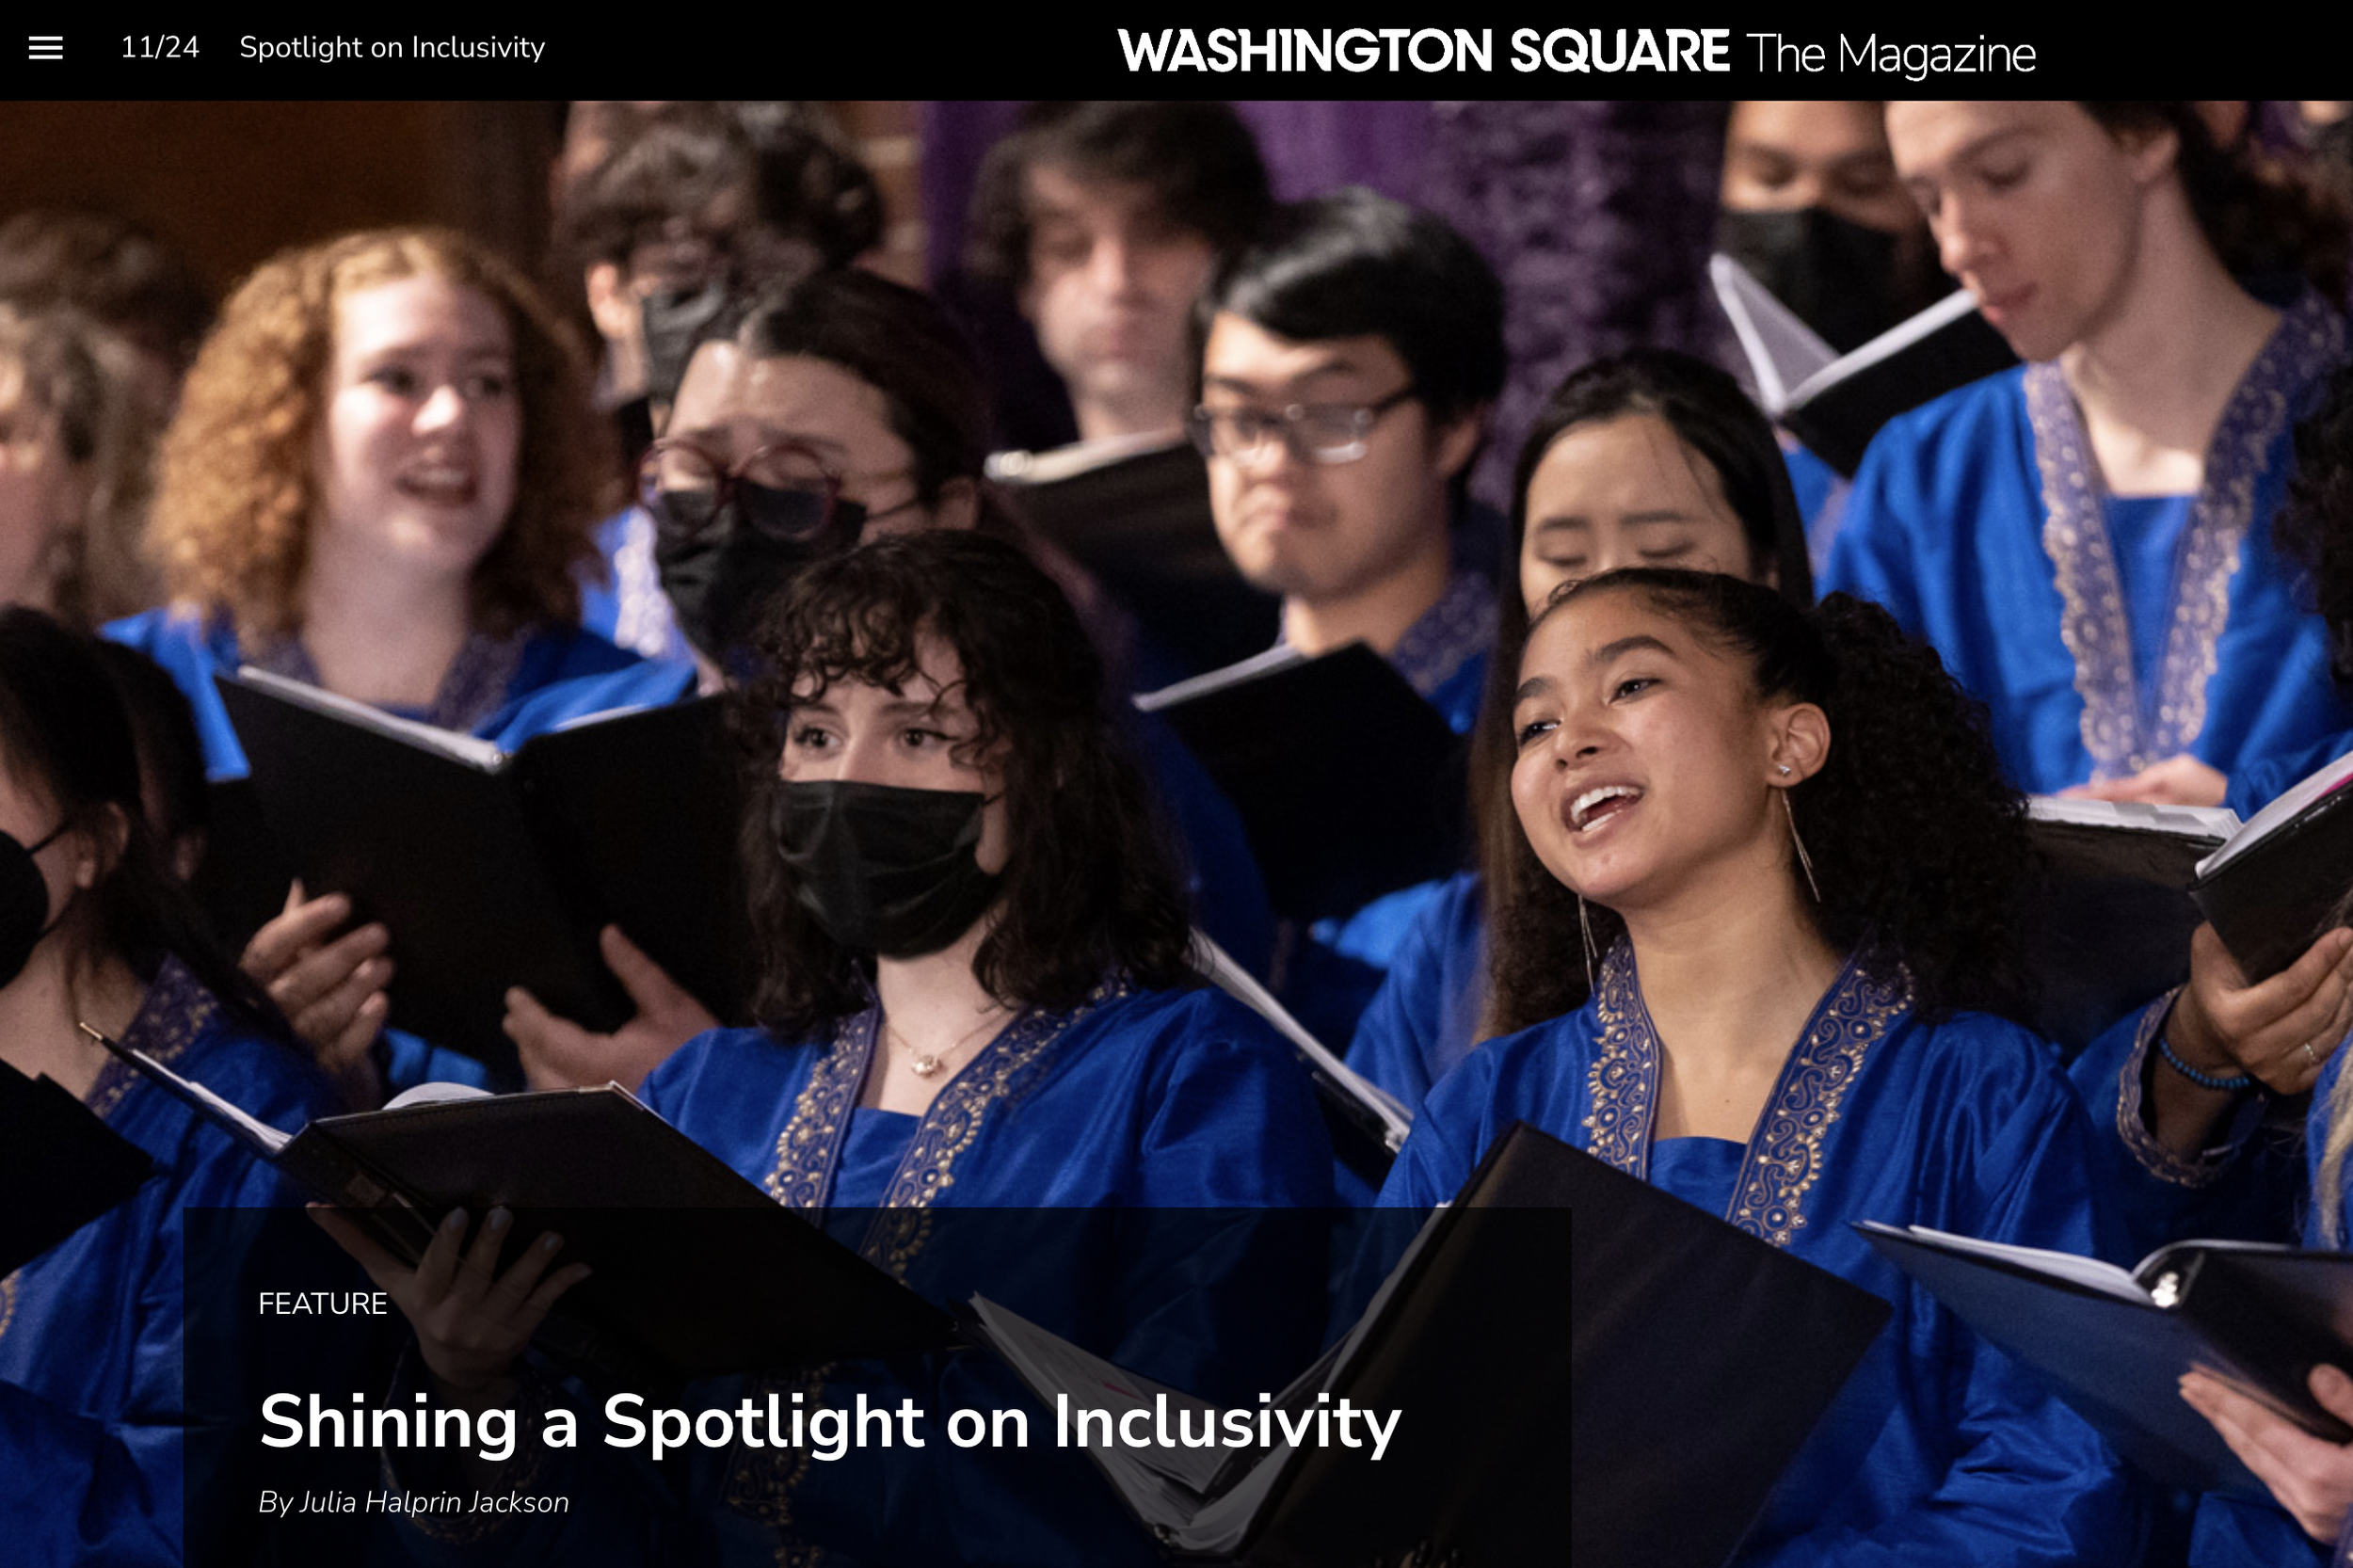 Shining a Spotlight on Inclusivity